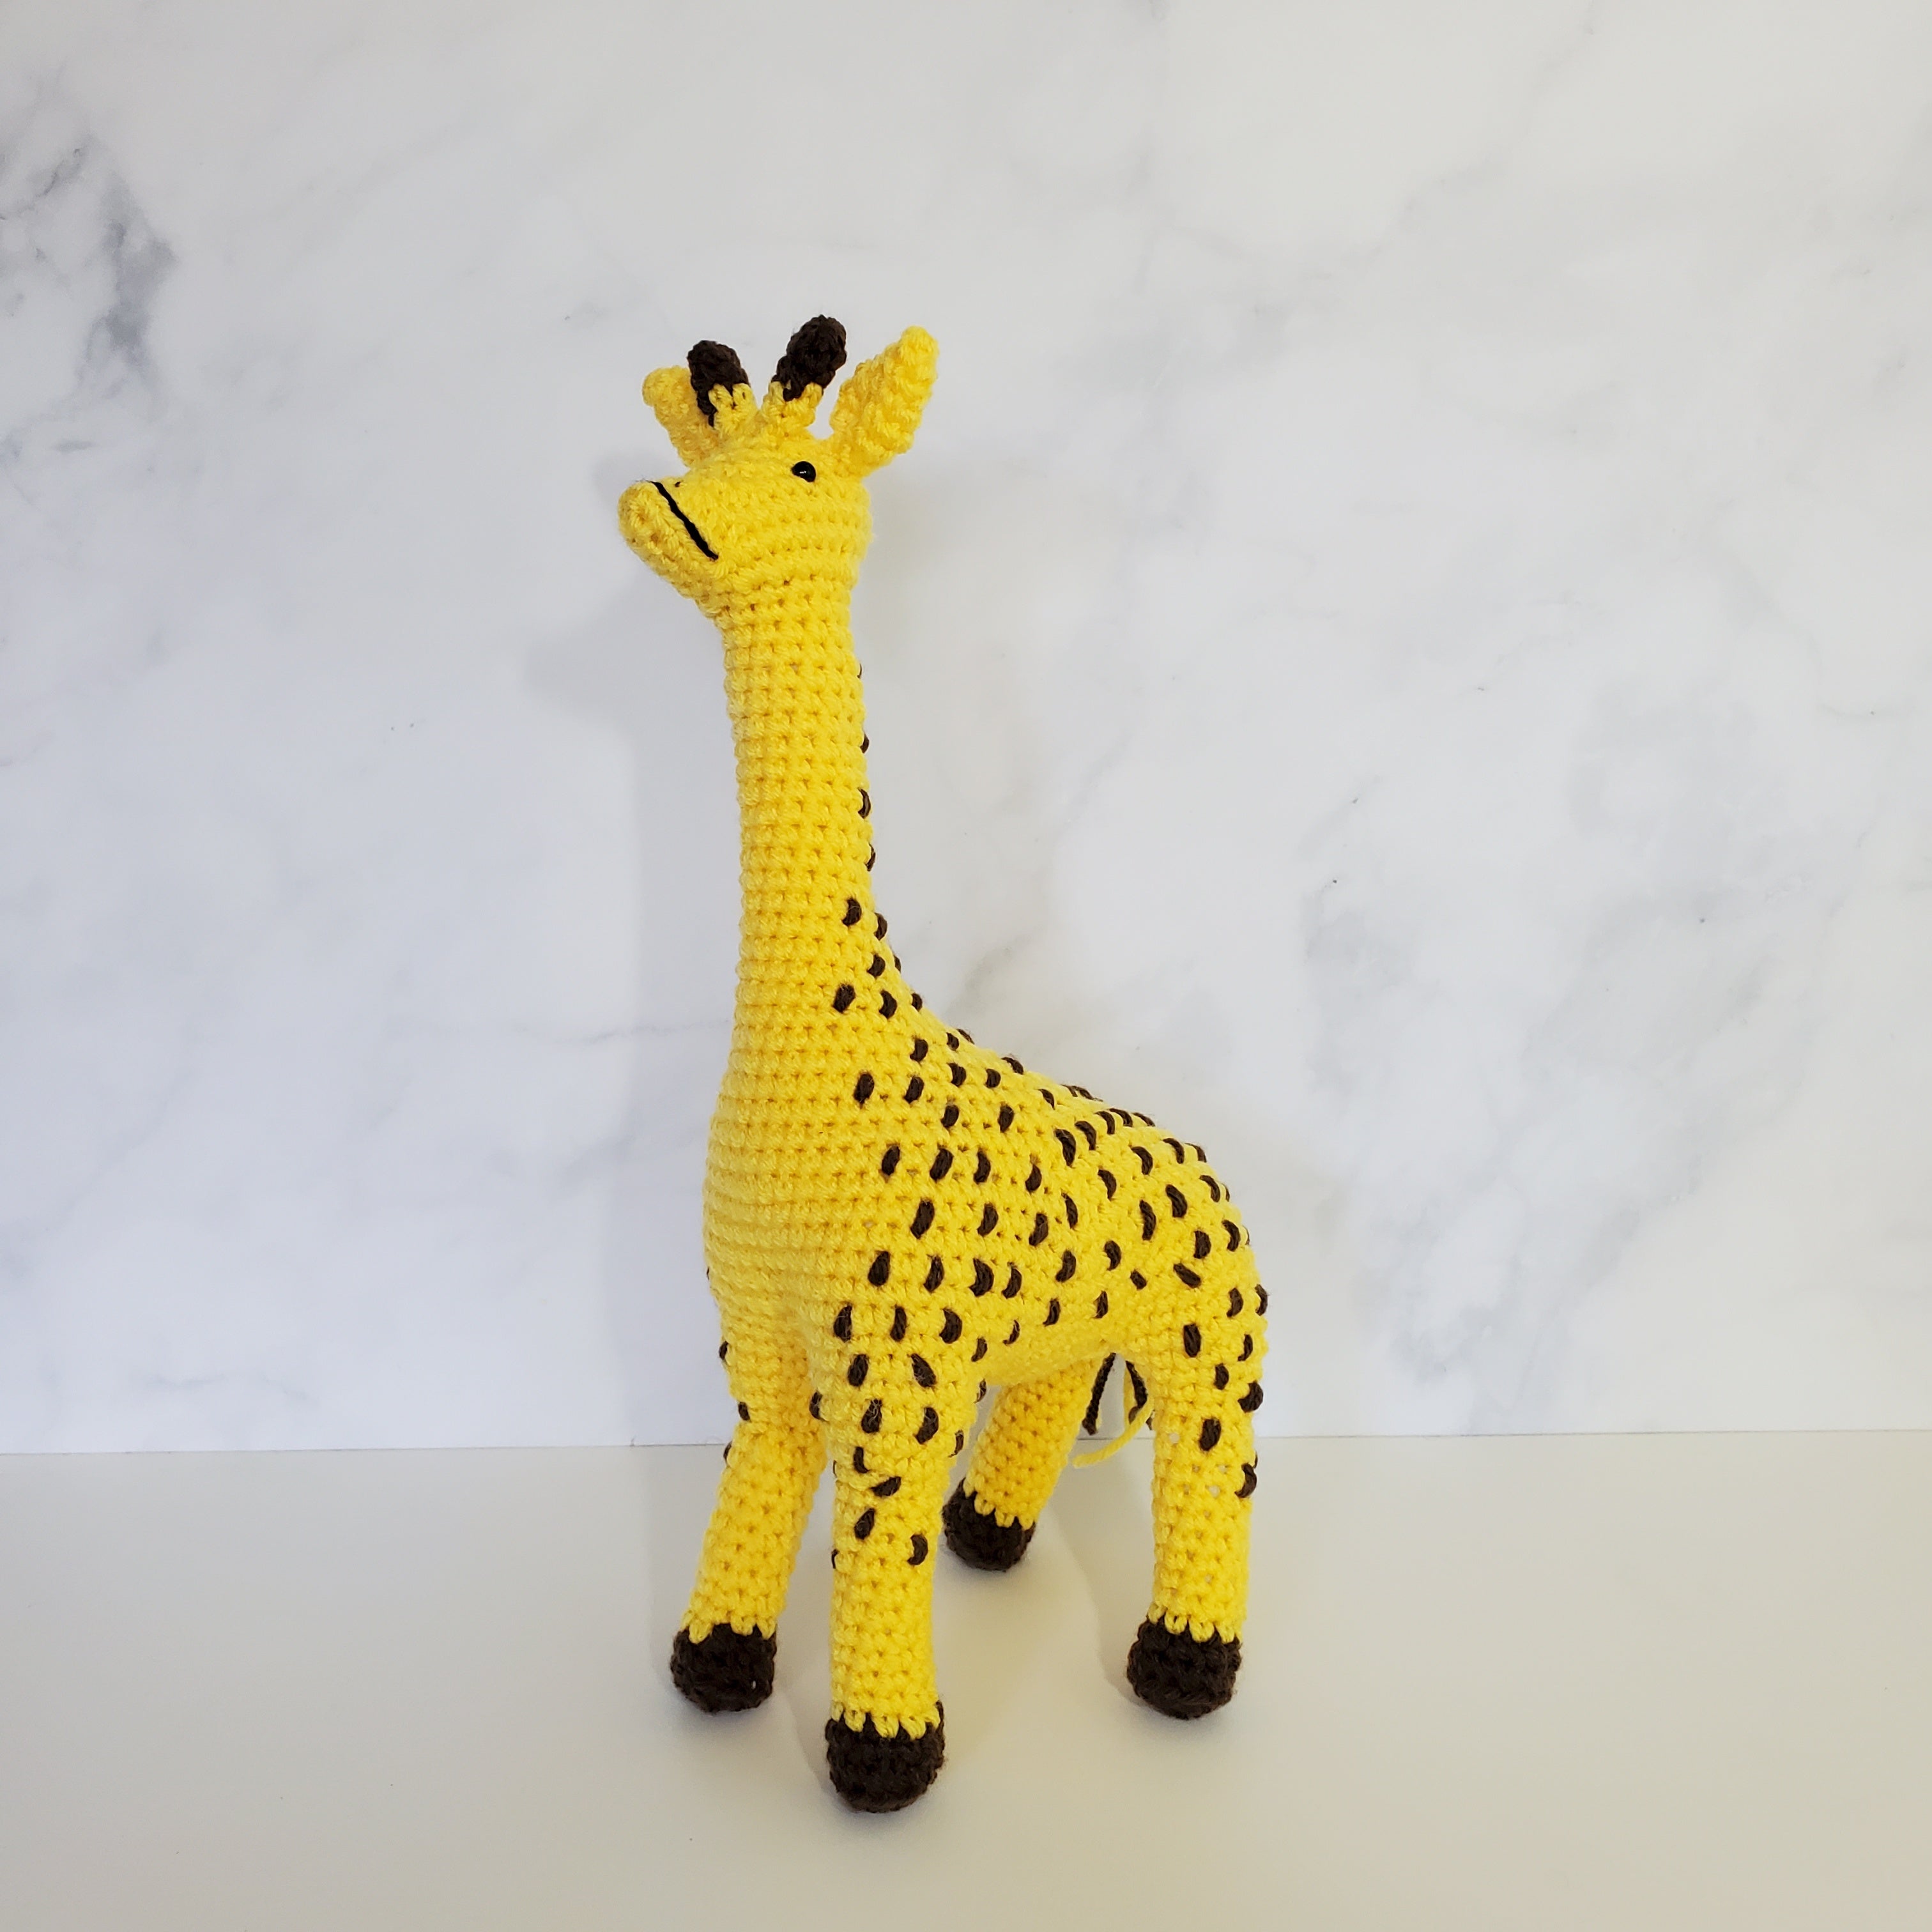 Yellow Giraffe Plush Toy - 13 Inches